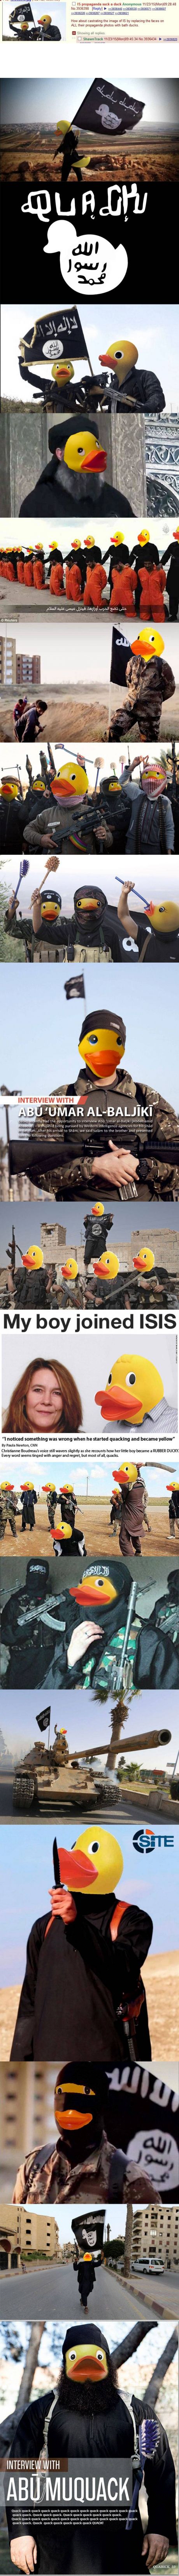 4chan photoshops terrorists into rubber ducks